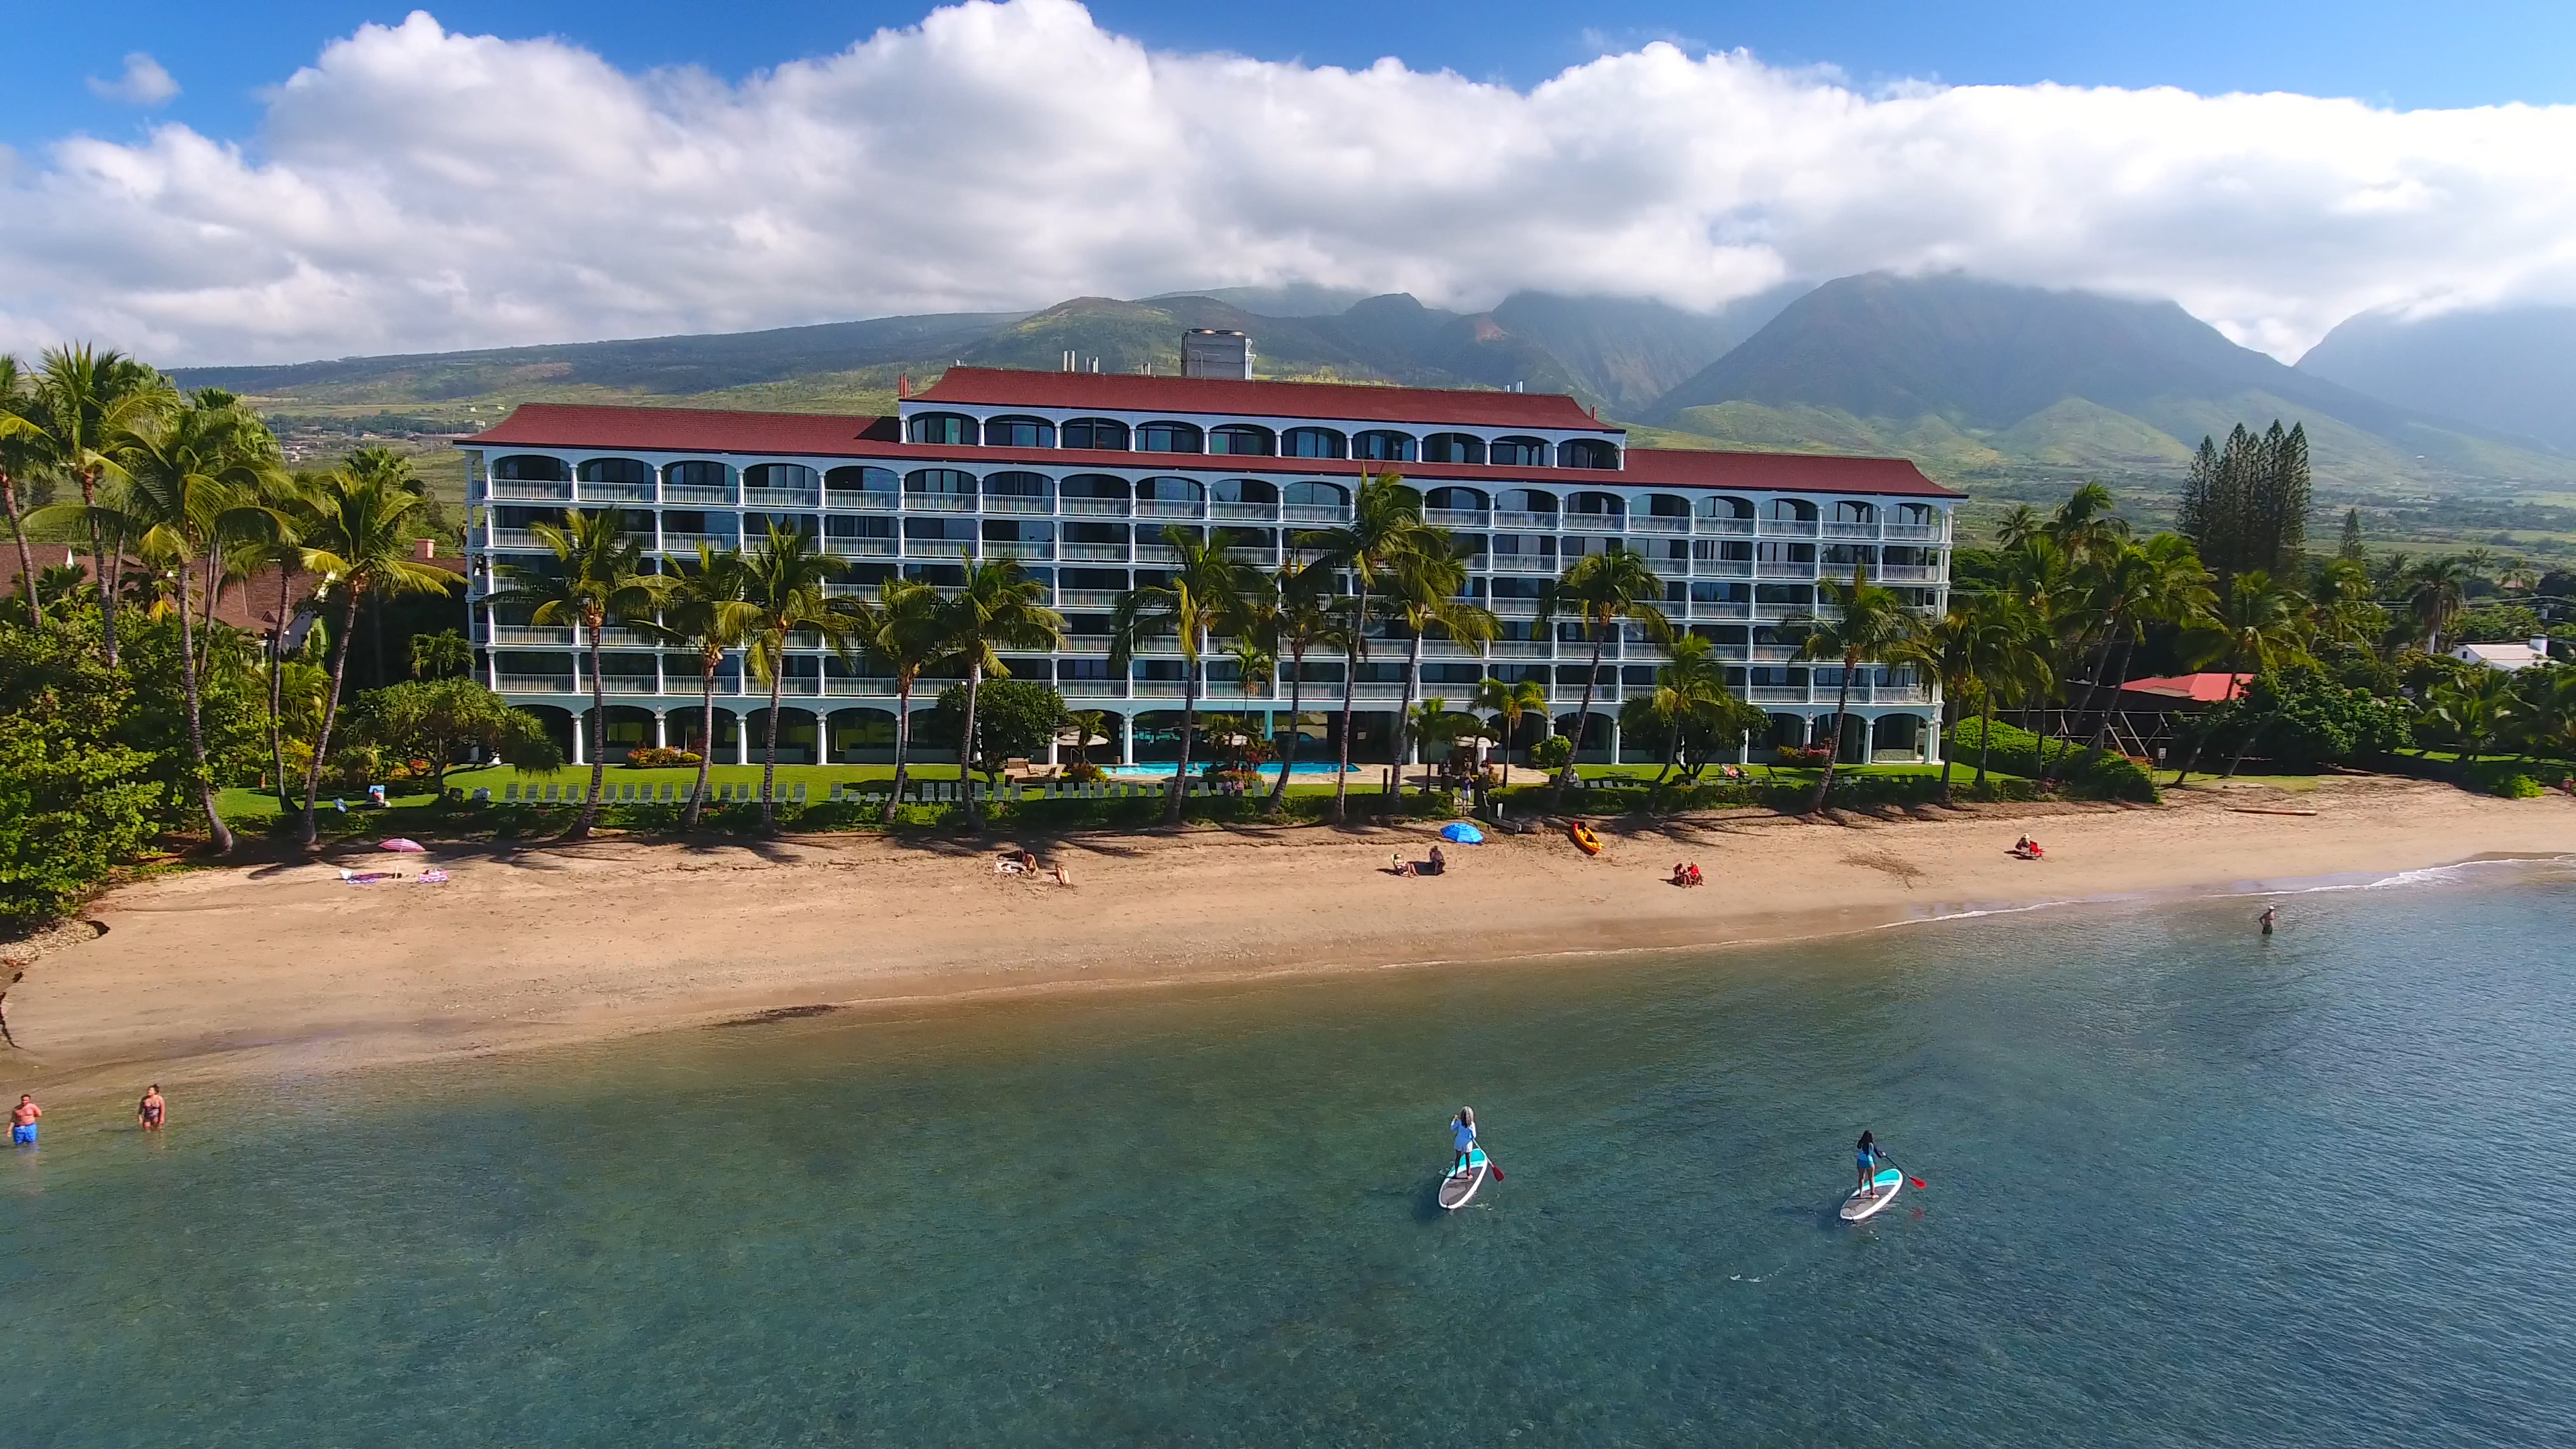 Oceanfront condominium, Apartments for rent, Lahaina Hawaii, United States, 3840x2160 4K Desktop